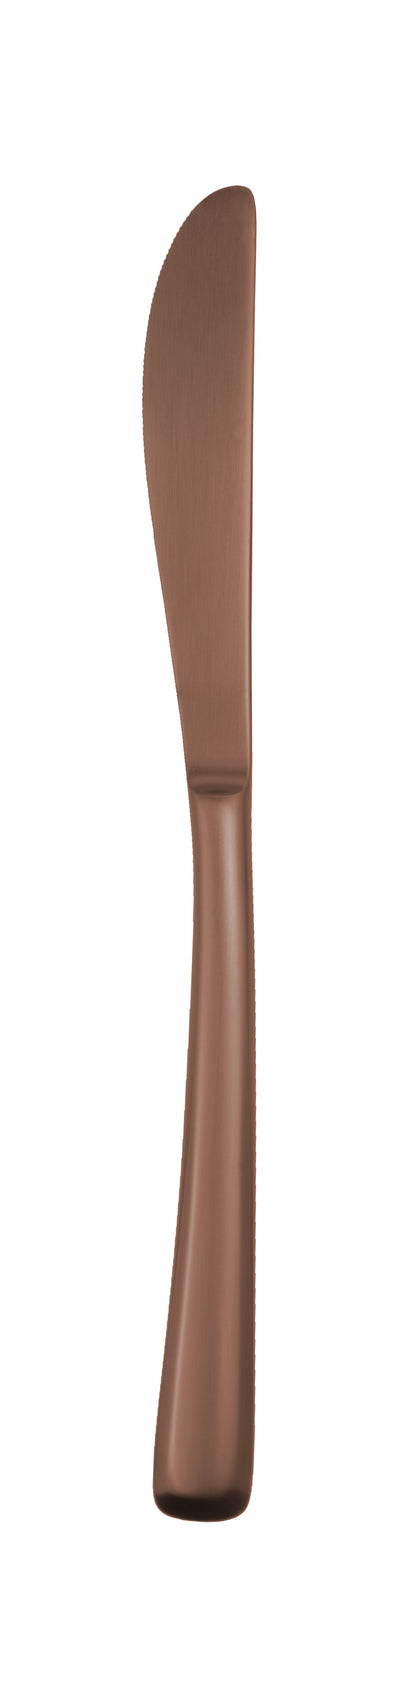 Table knife MEDAN PVD copper brushed 237 mm